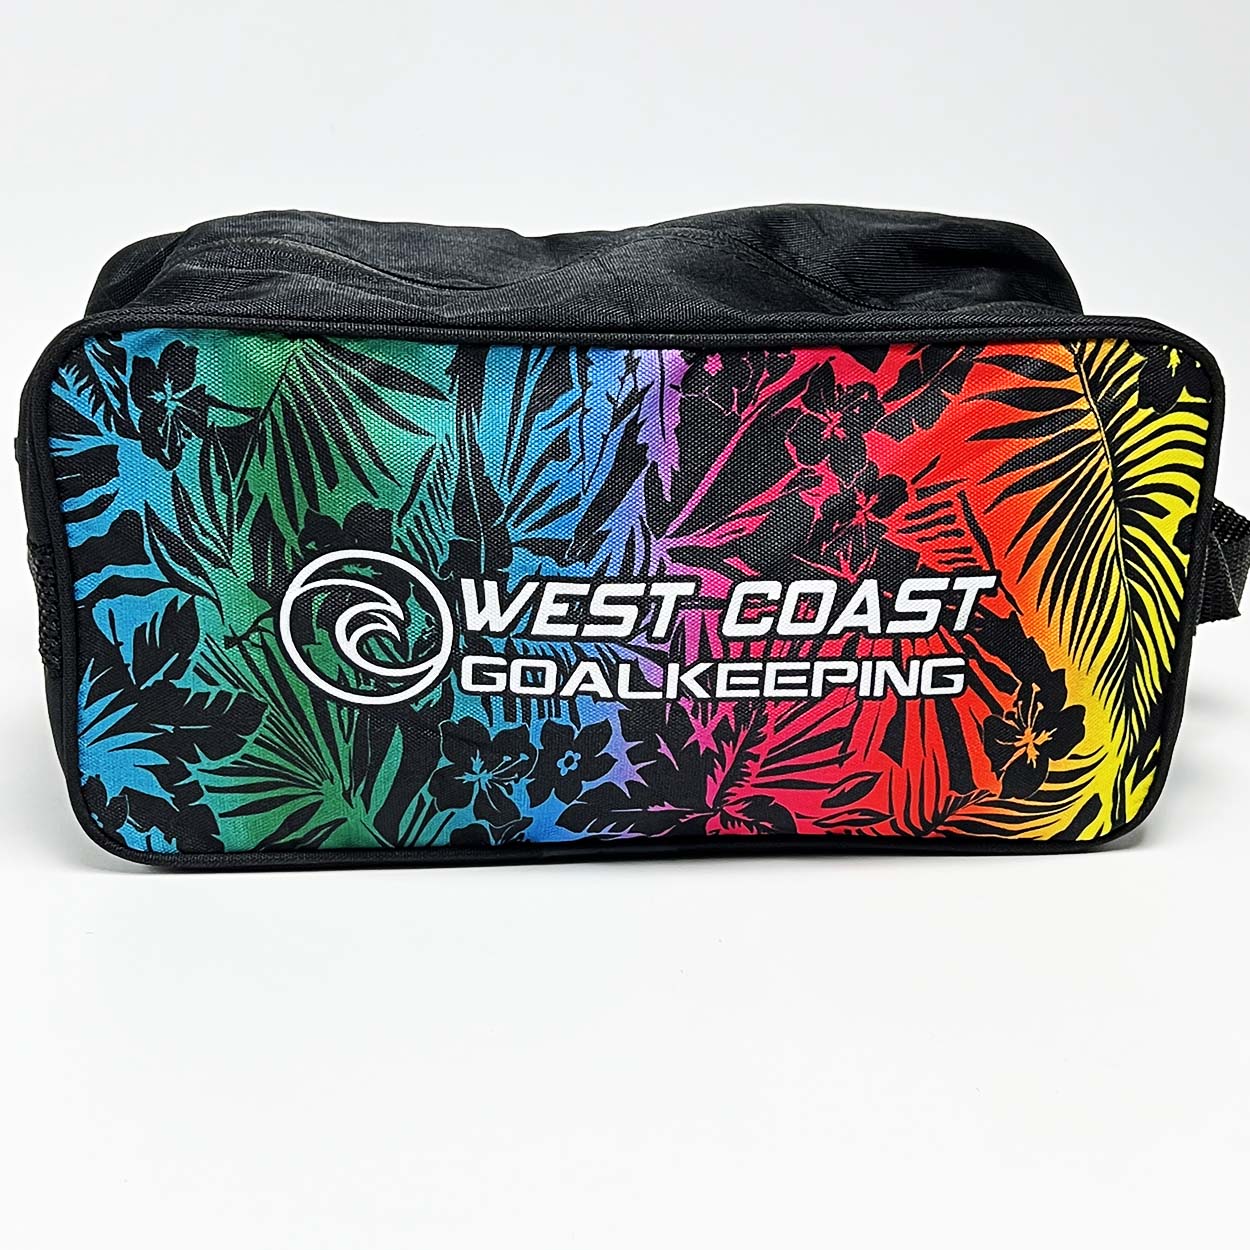 Aloha Glove Bag - West Goalkeeping